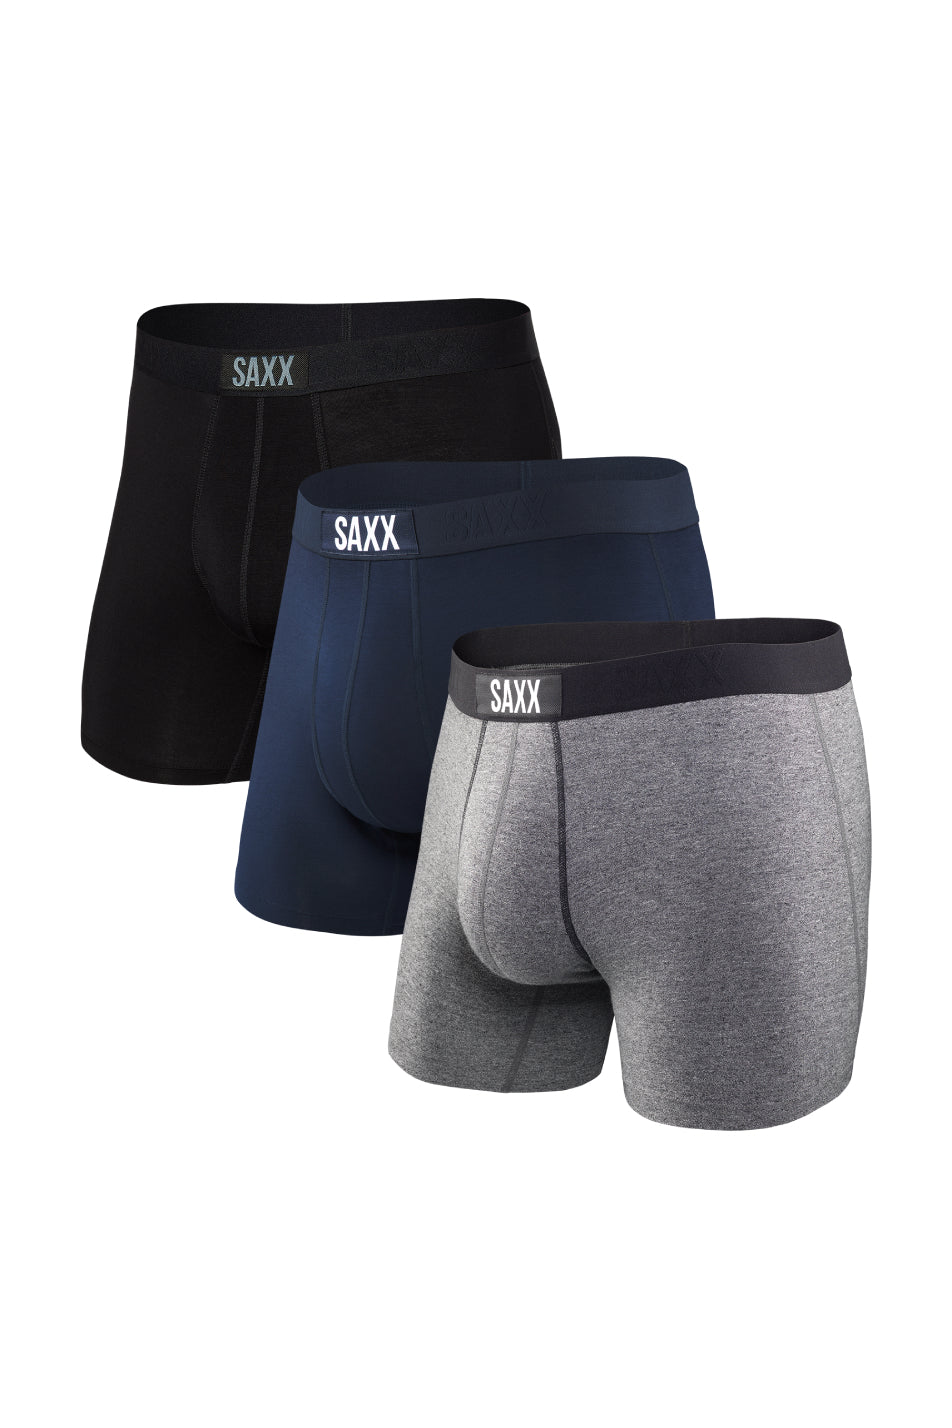 SAXX 3 Pack Men's Vibe Soft Boxer Brief